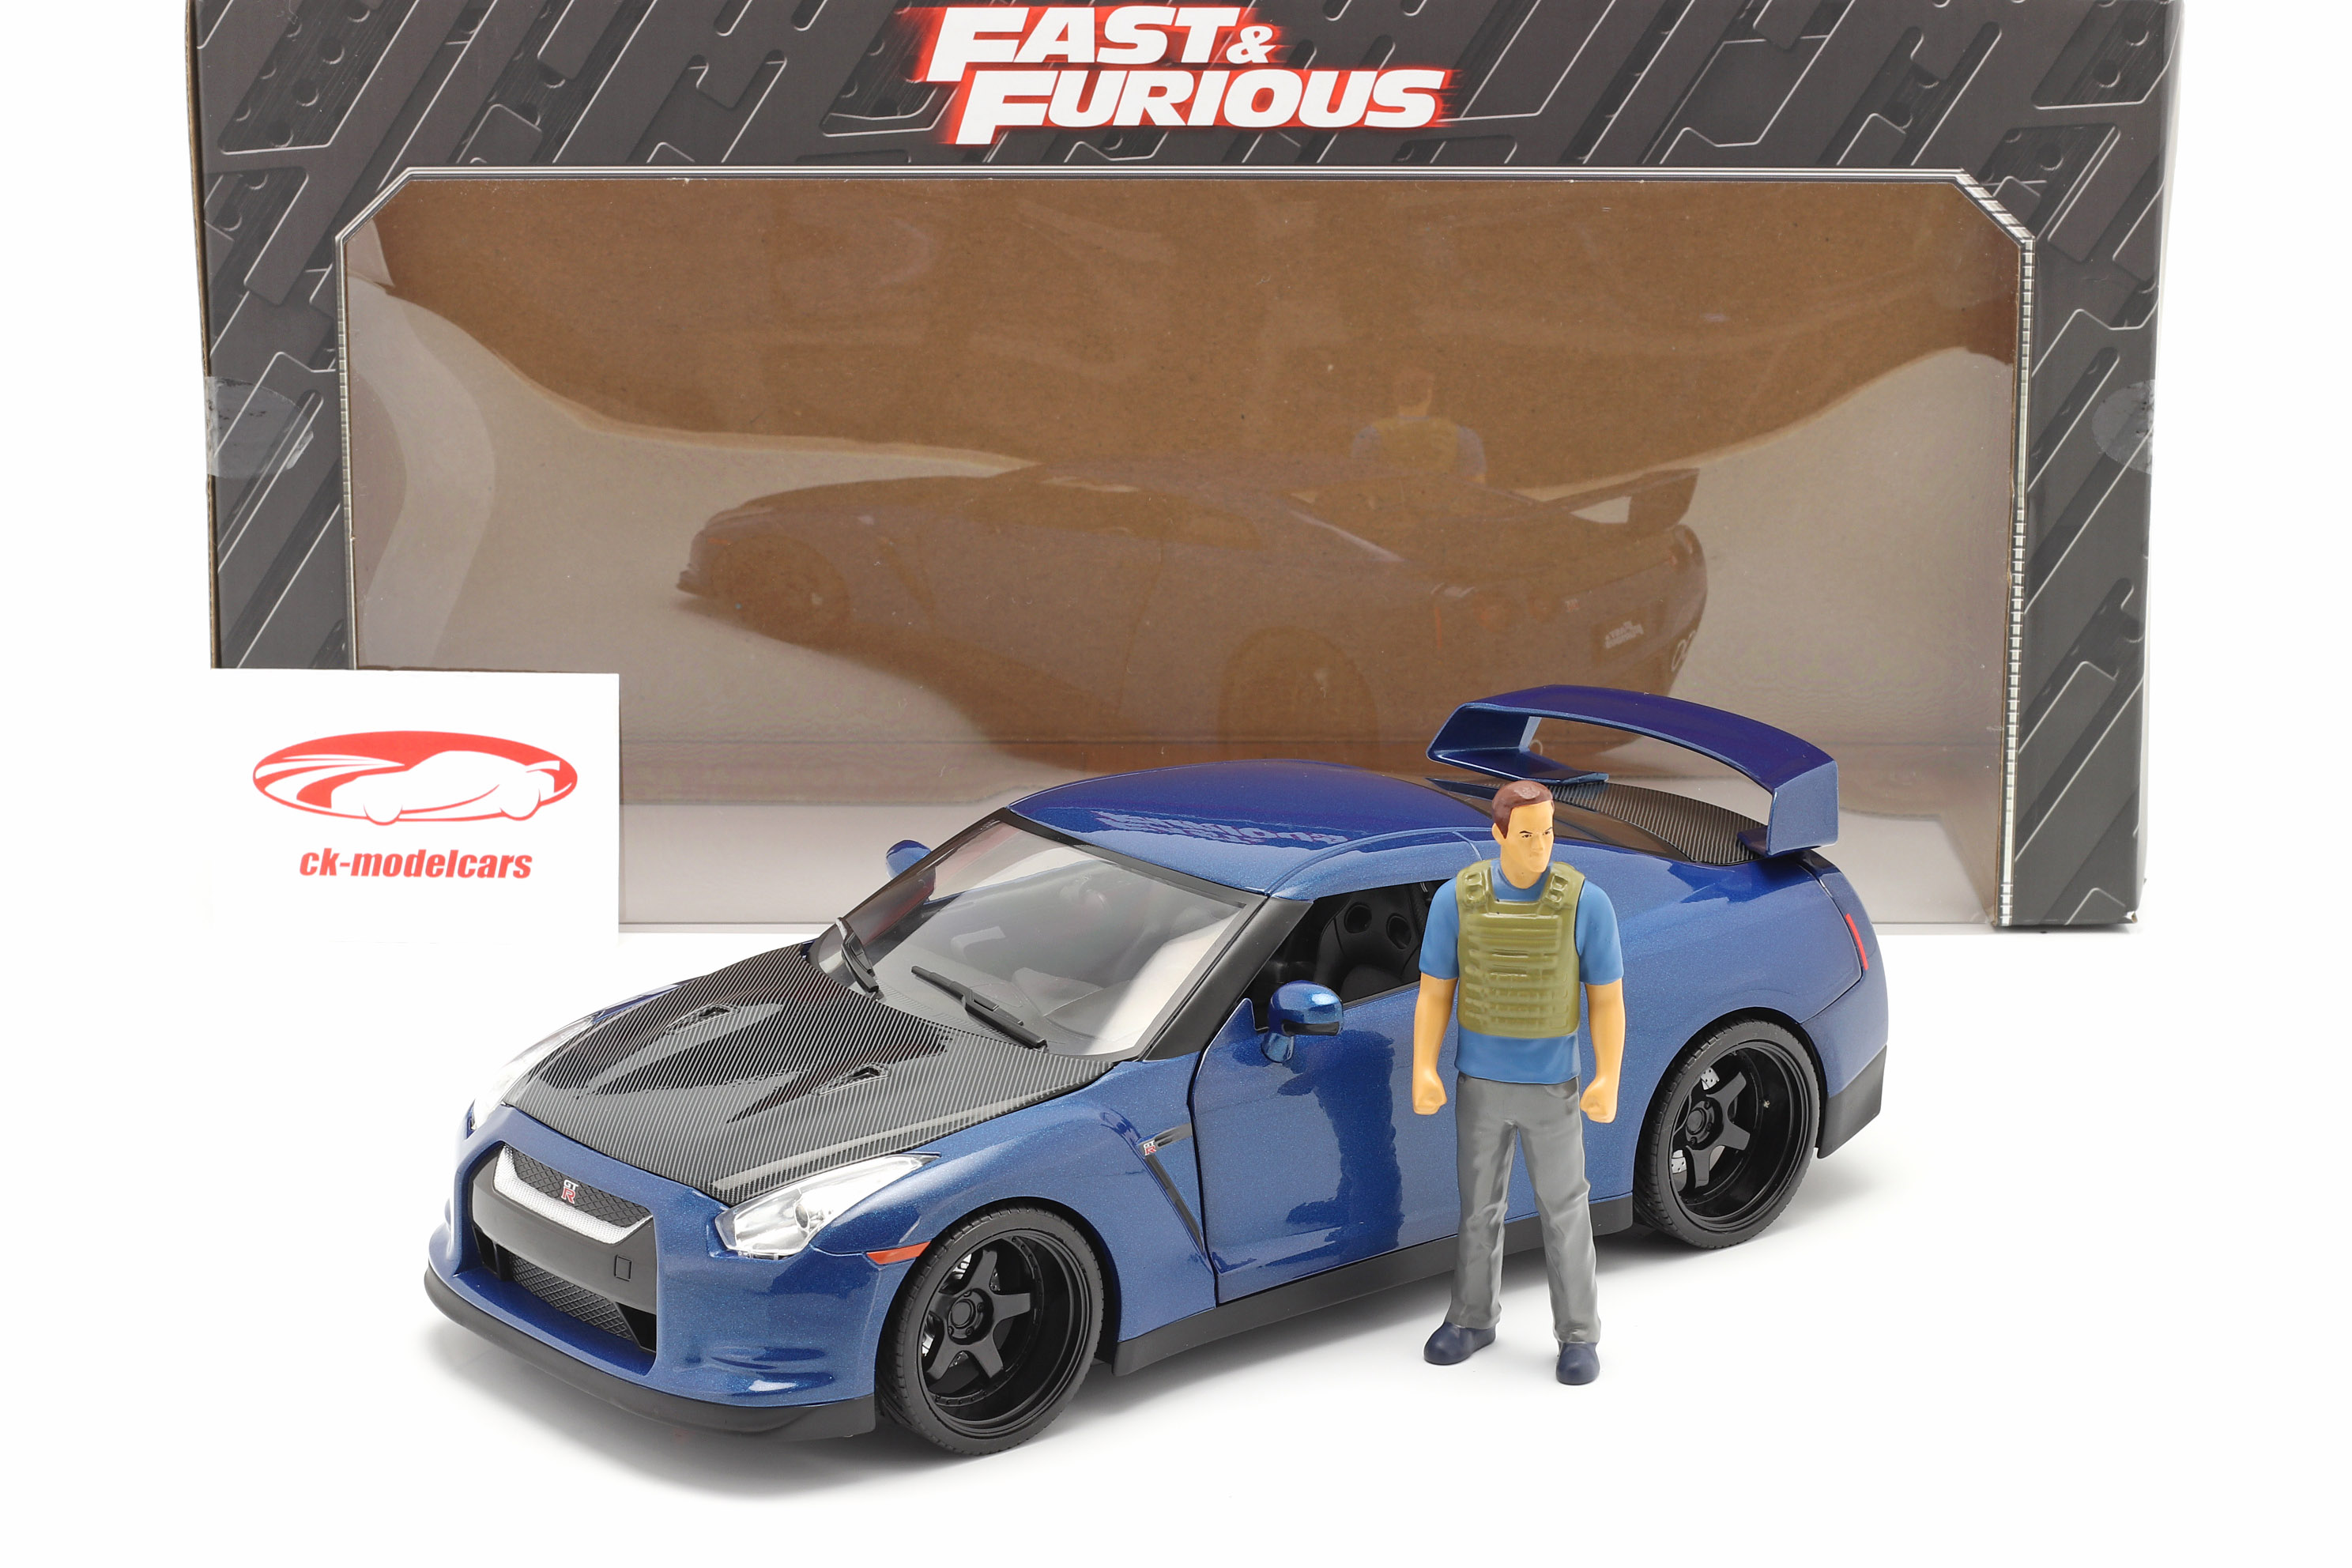 Brian's Nissan GT-R (R35) 2009 Fast & Furious 7 (2015) Con figura 1:18 Jada Toys